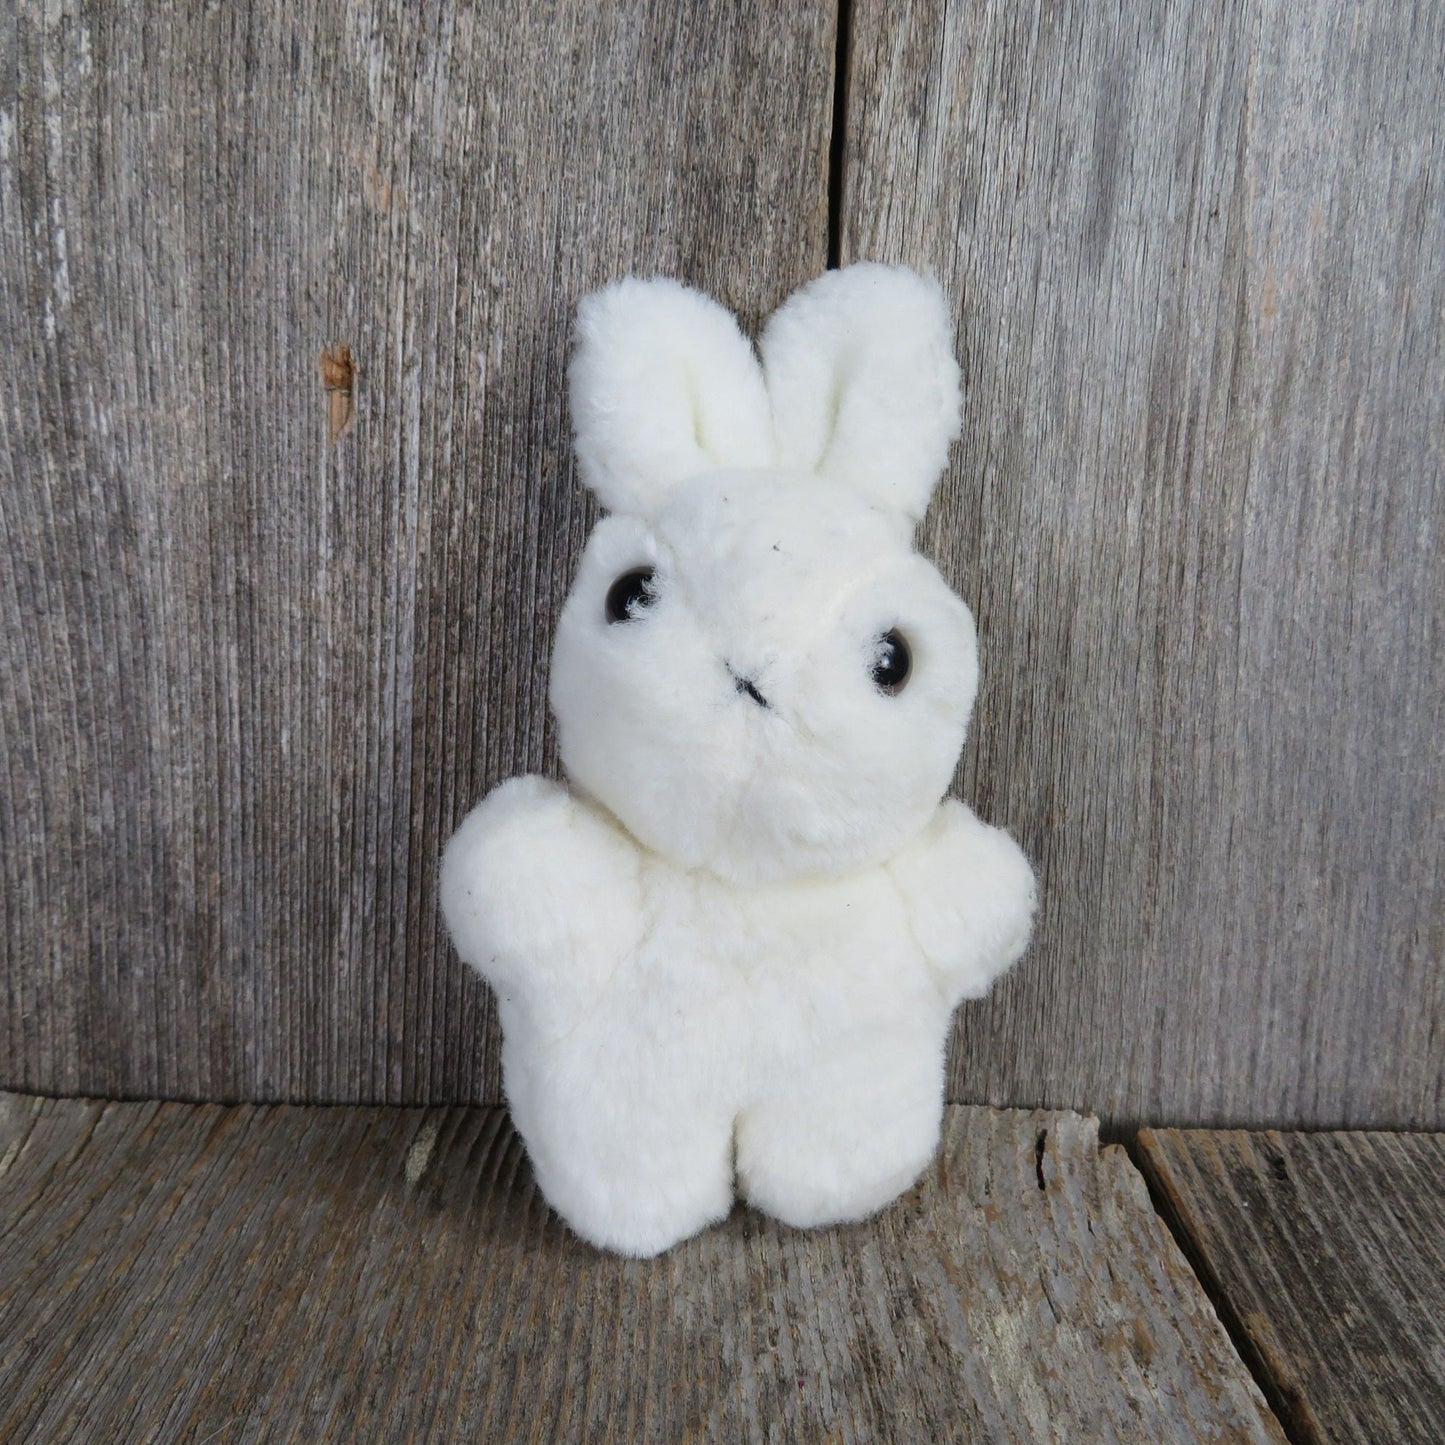 Vintage Tiny White Bunny Plush Stitched Cross Nose White Ears Rabbit Stuffed Animal